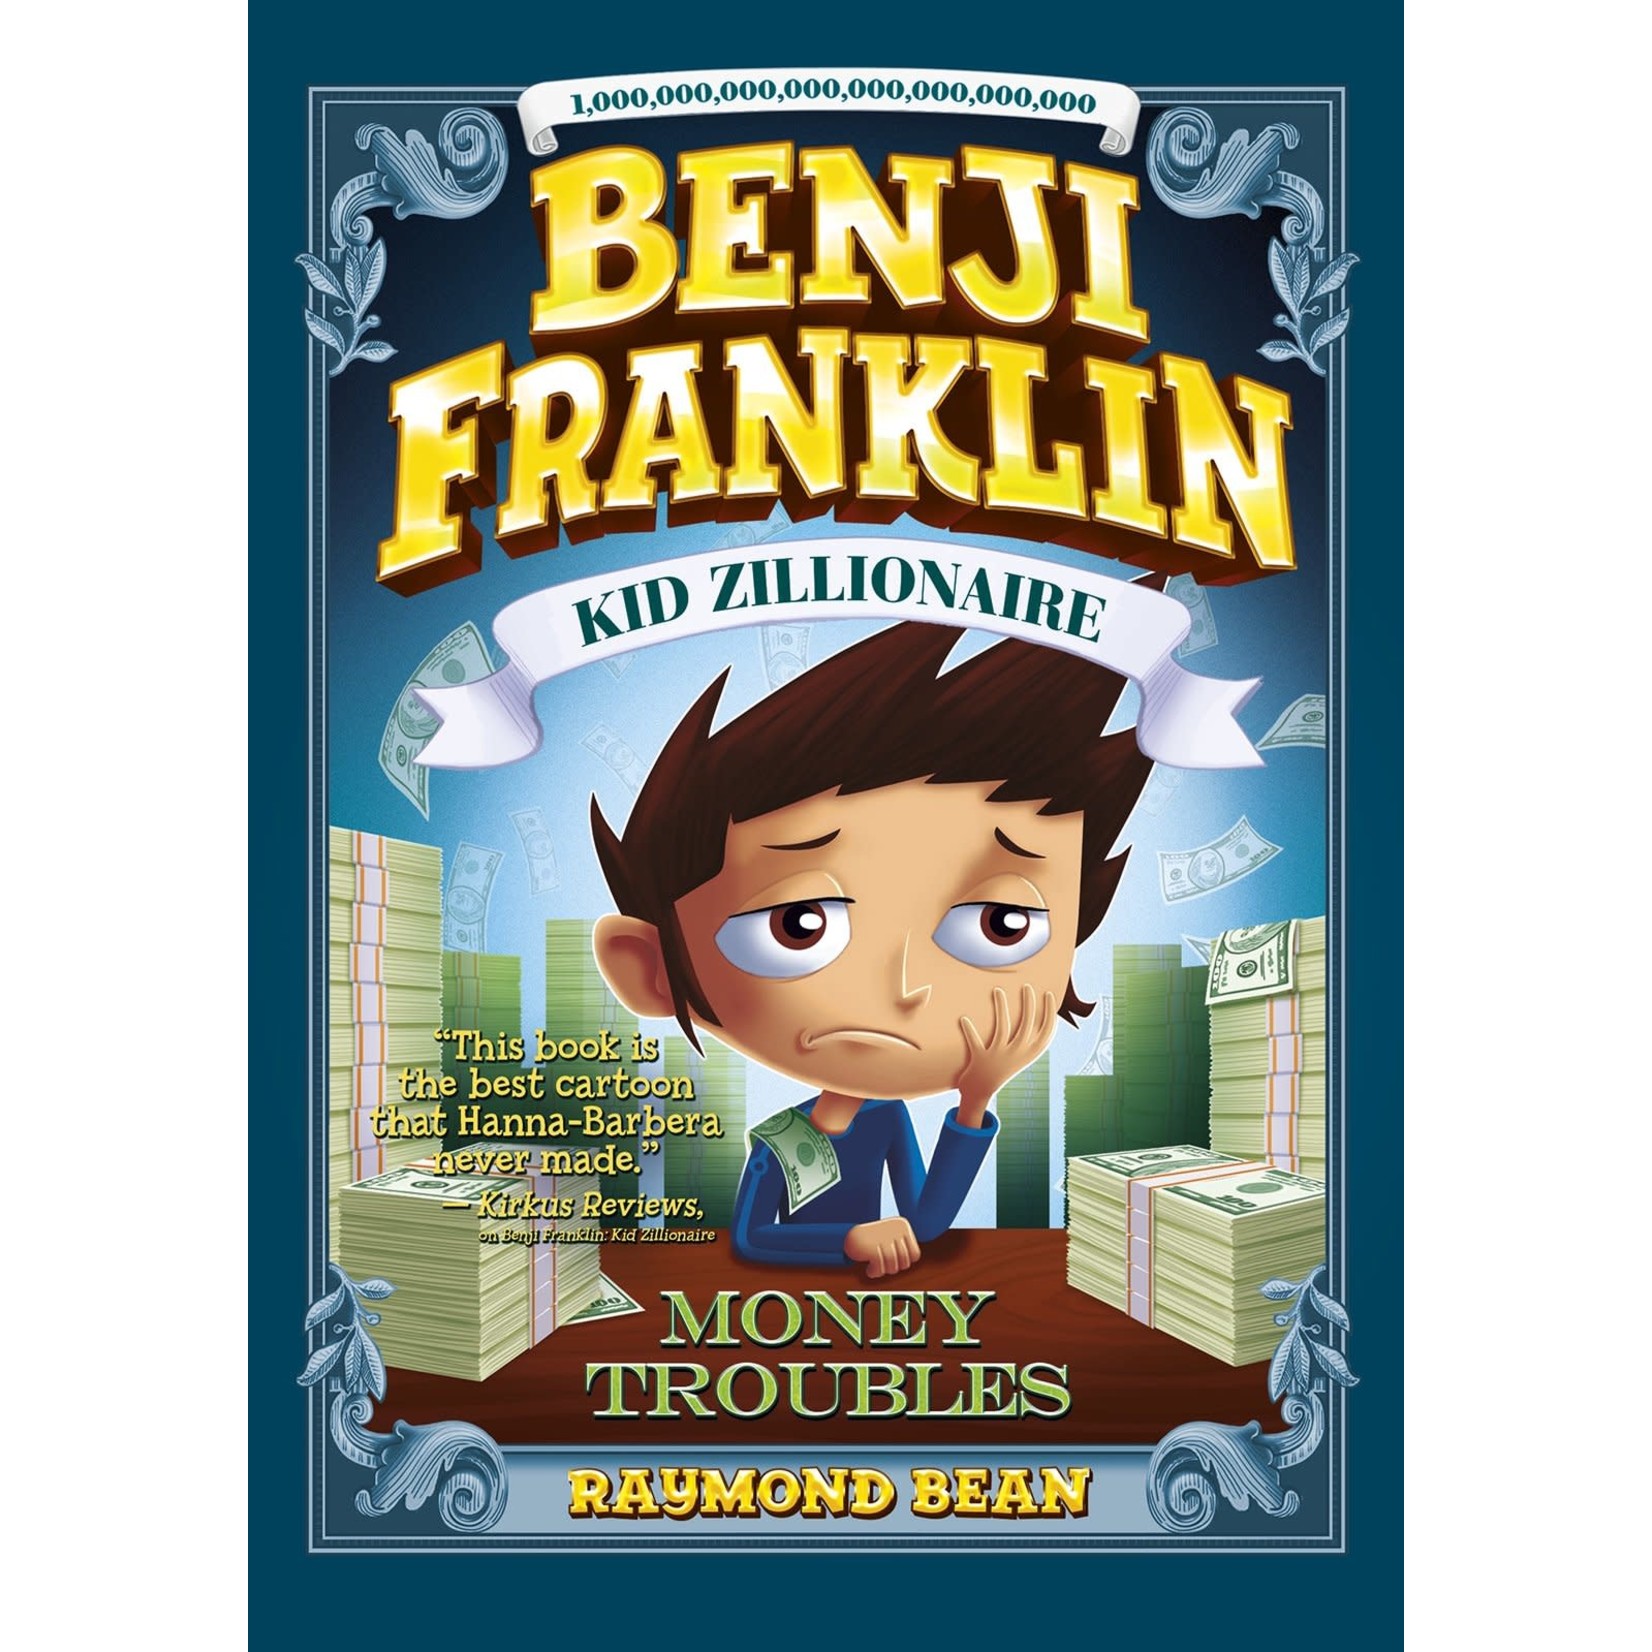 Raymond Bean Benji Franklin - Kid Zillionaire Money Troubles